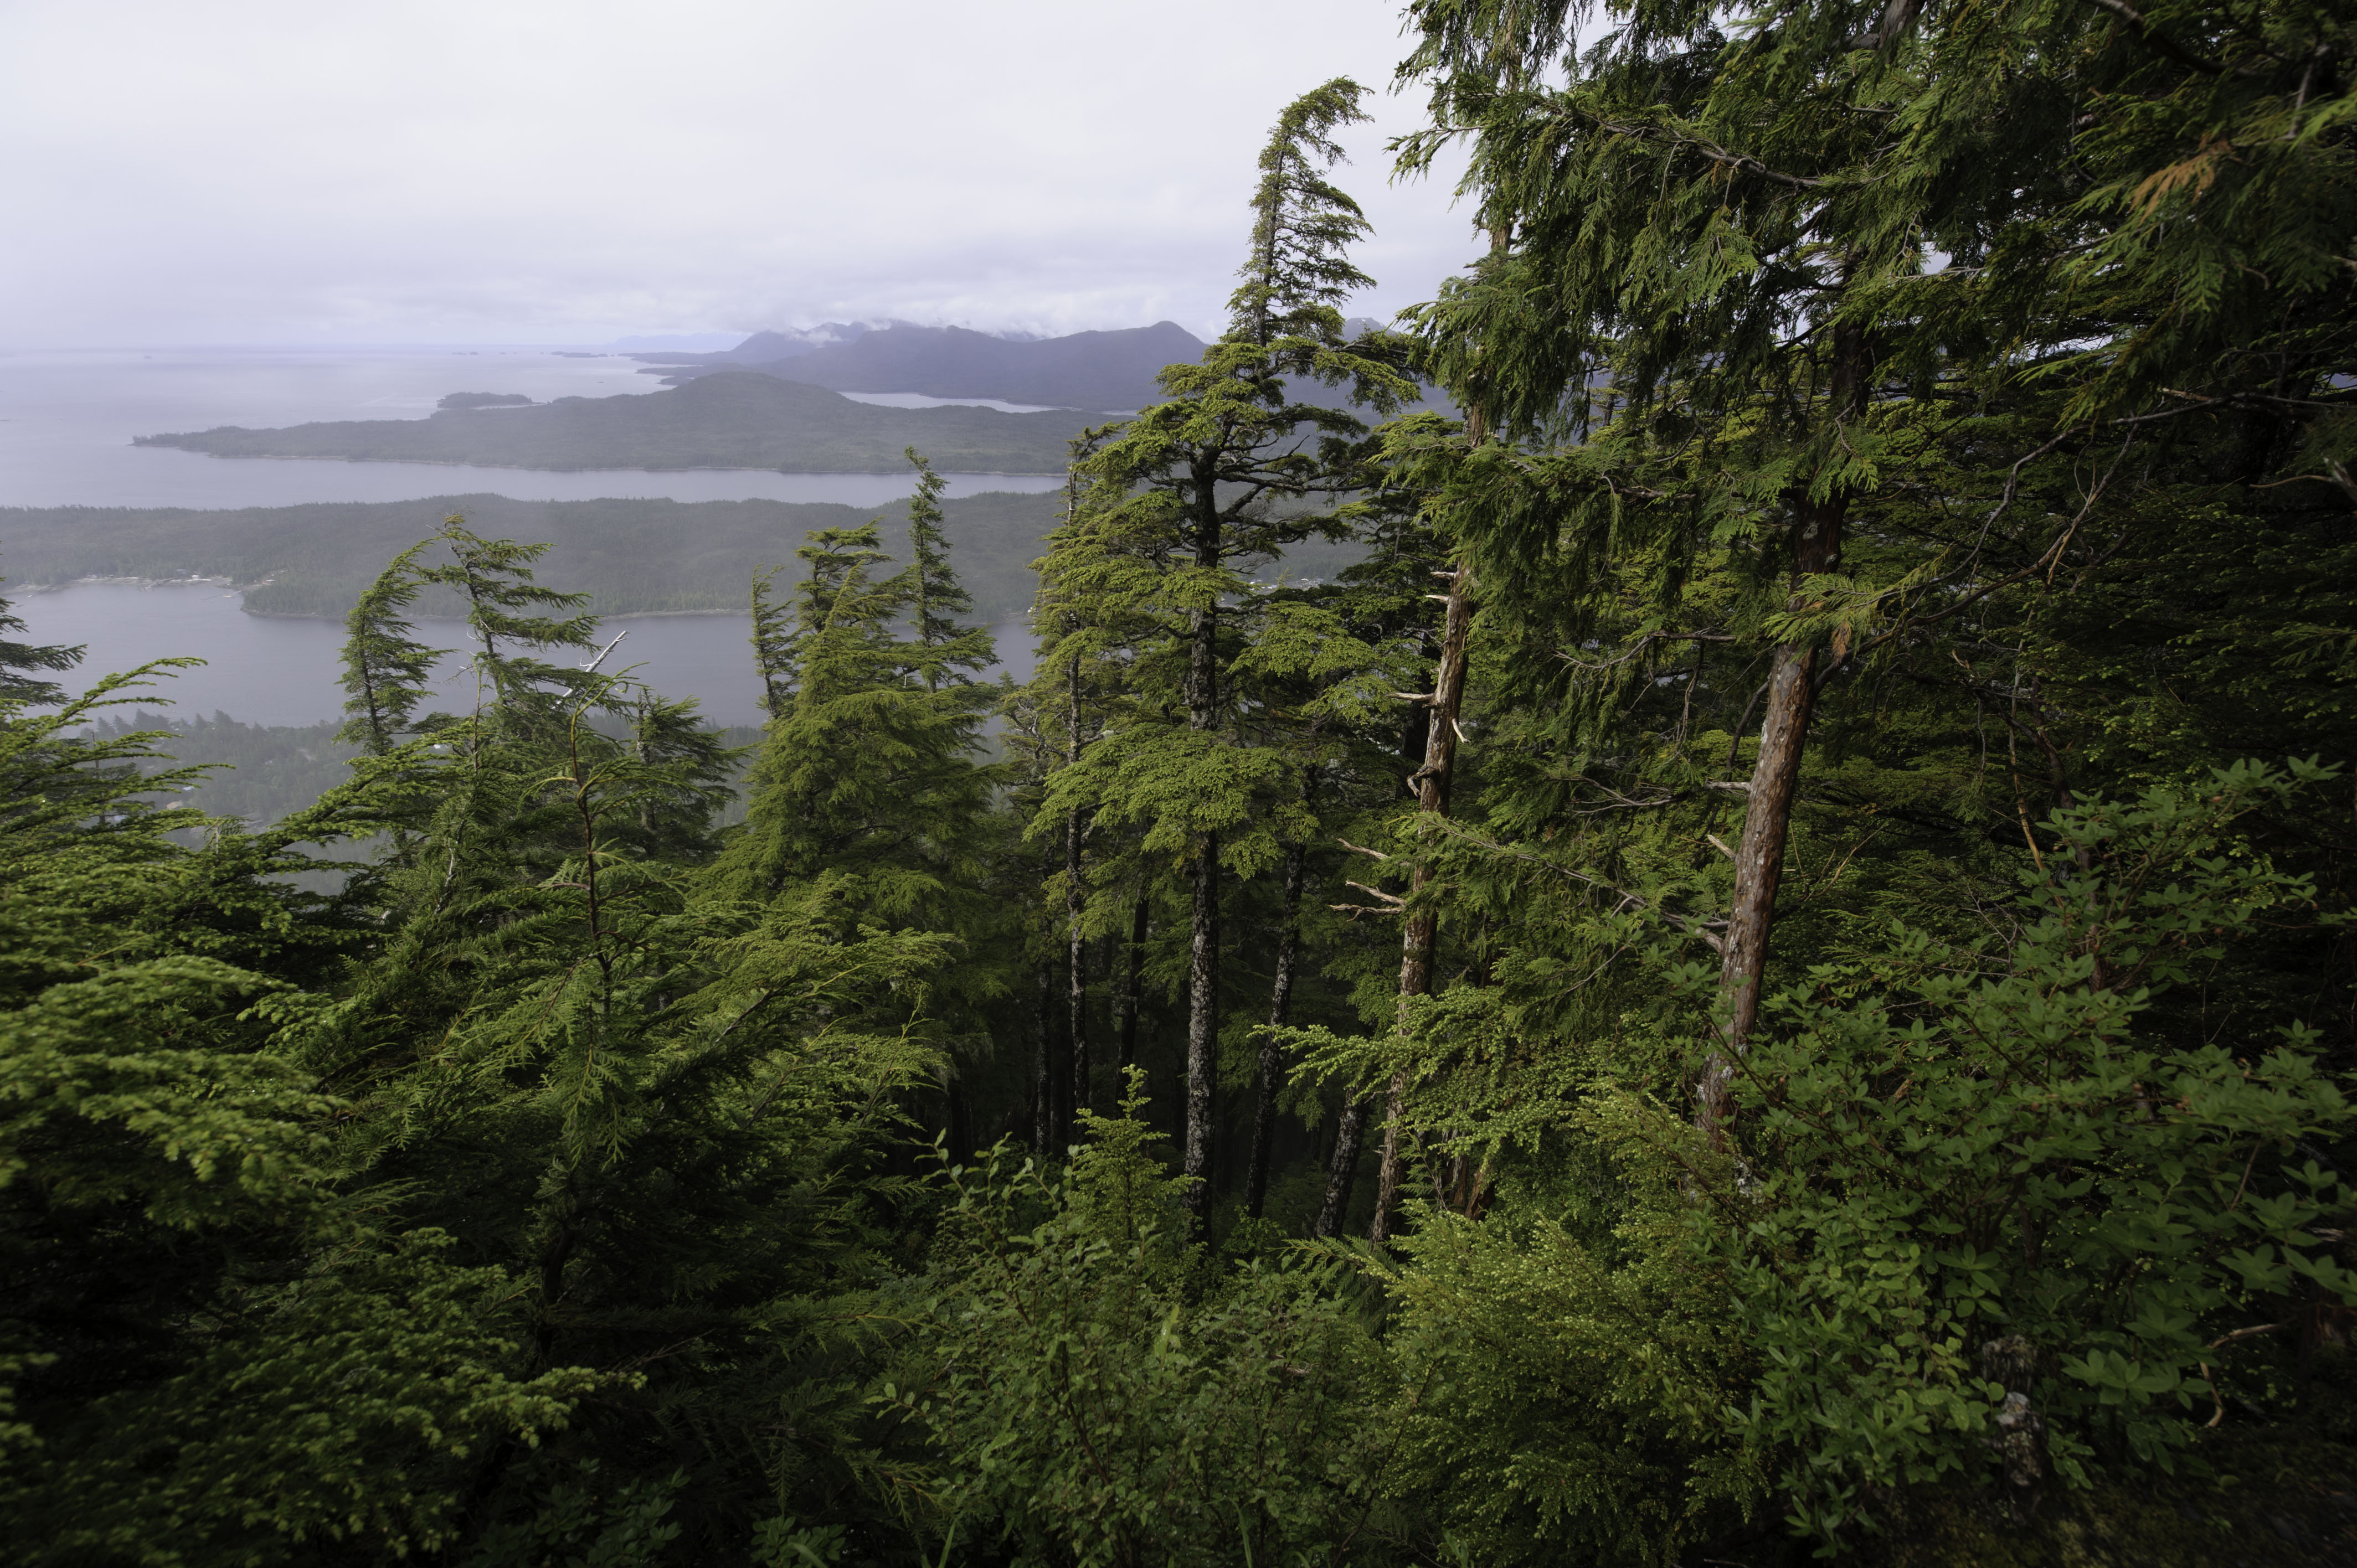 Alaskan Pacific maritime ecosystems